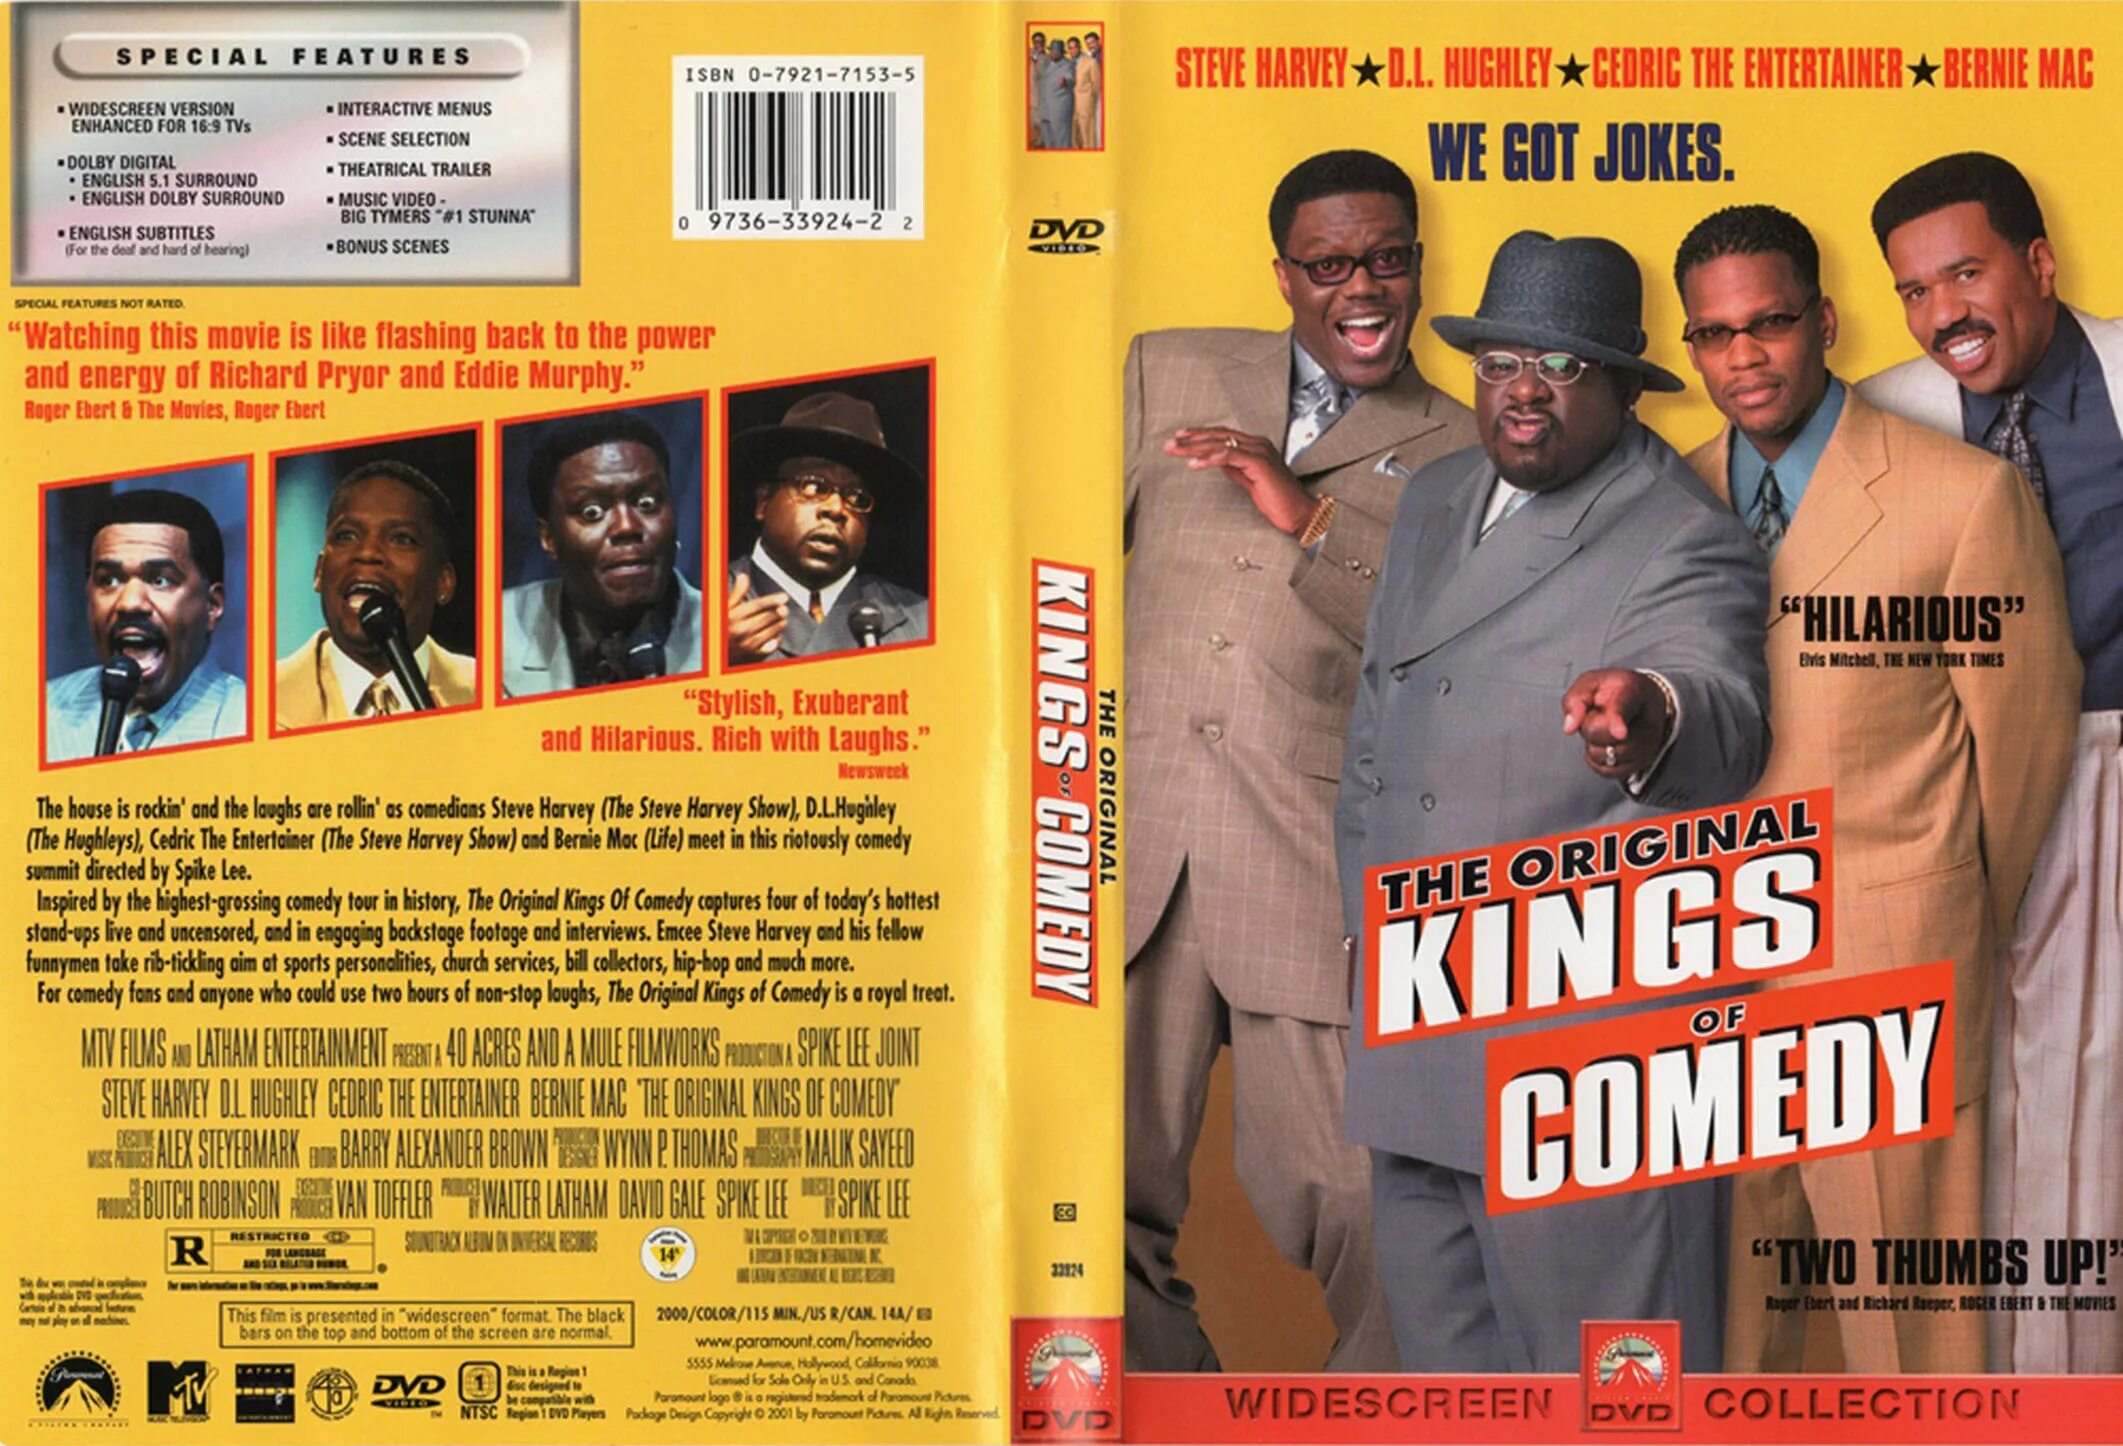 The original king. Король комедии диск. Черный юмор DVD. Original King. DVD Cover comedy.